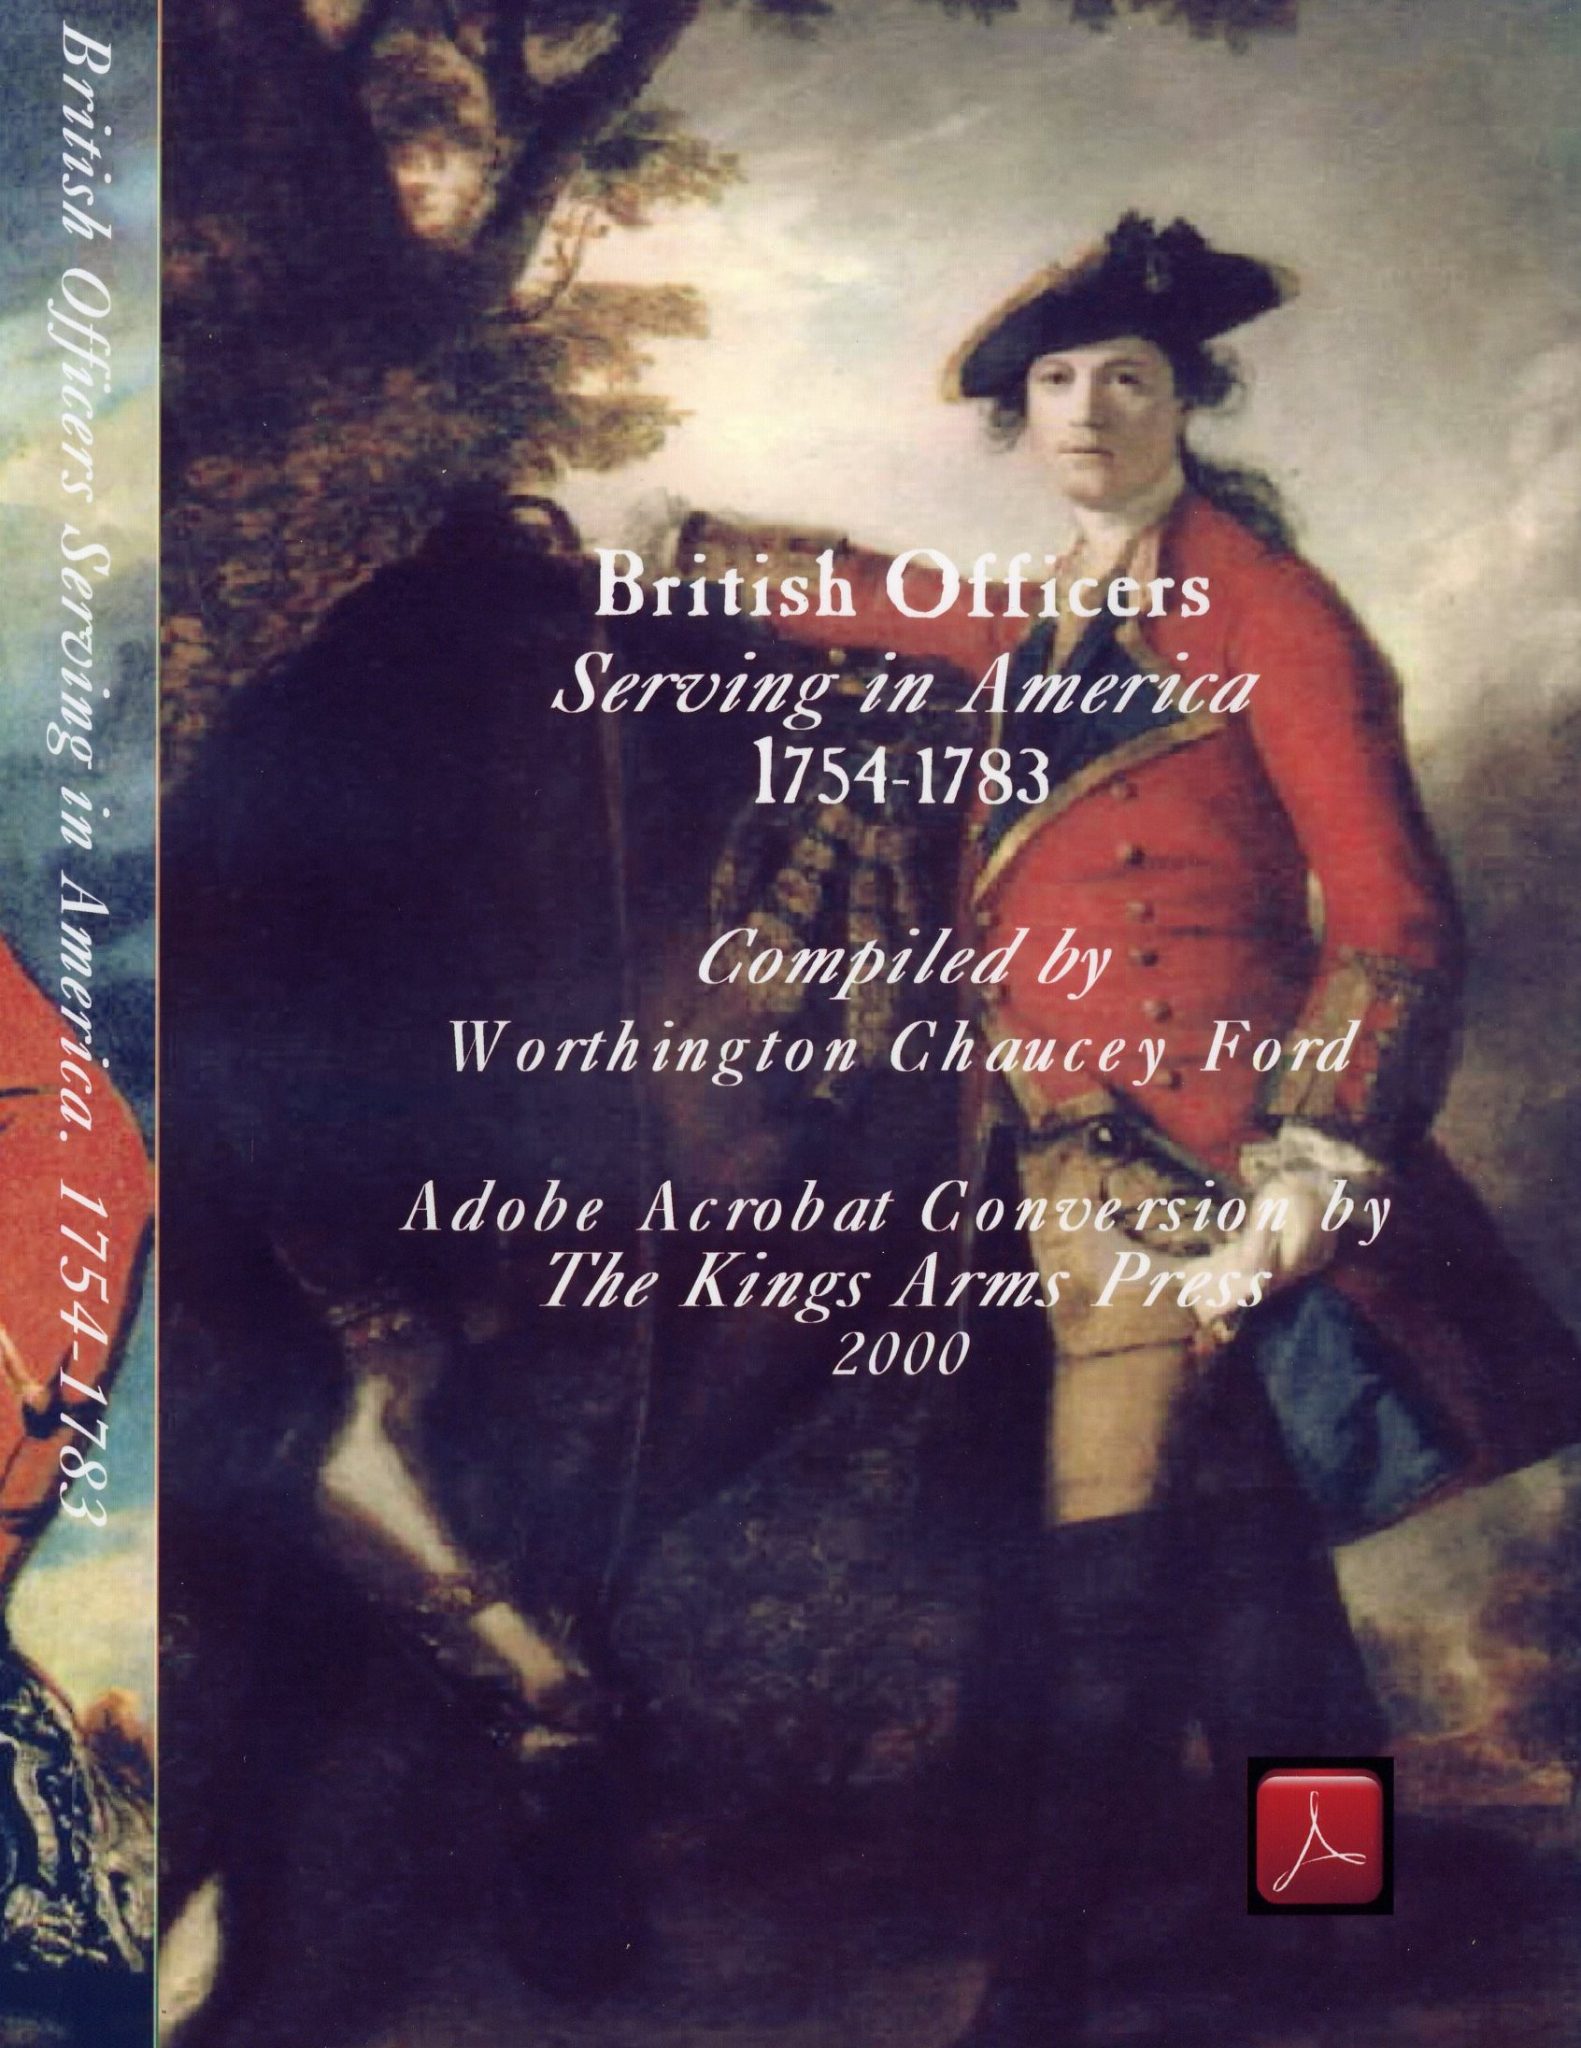 British Officers Serving in America, 1754-1775 & British Officers Serving in America, 1775-1783 CD-ROM